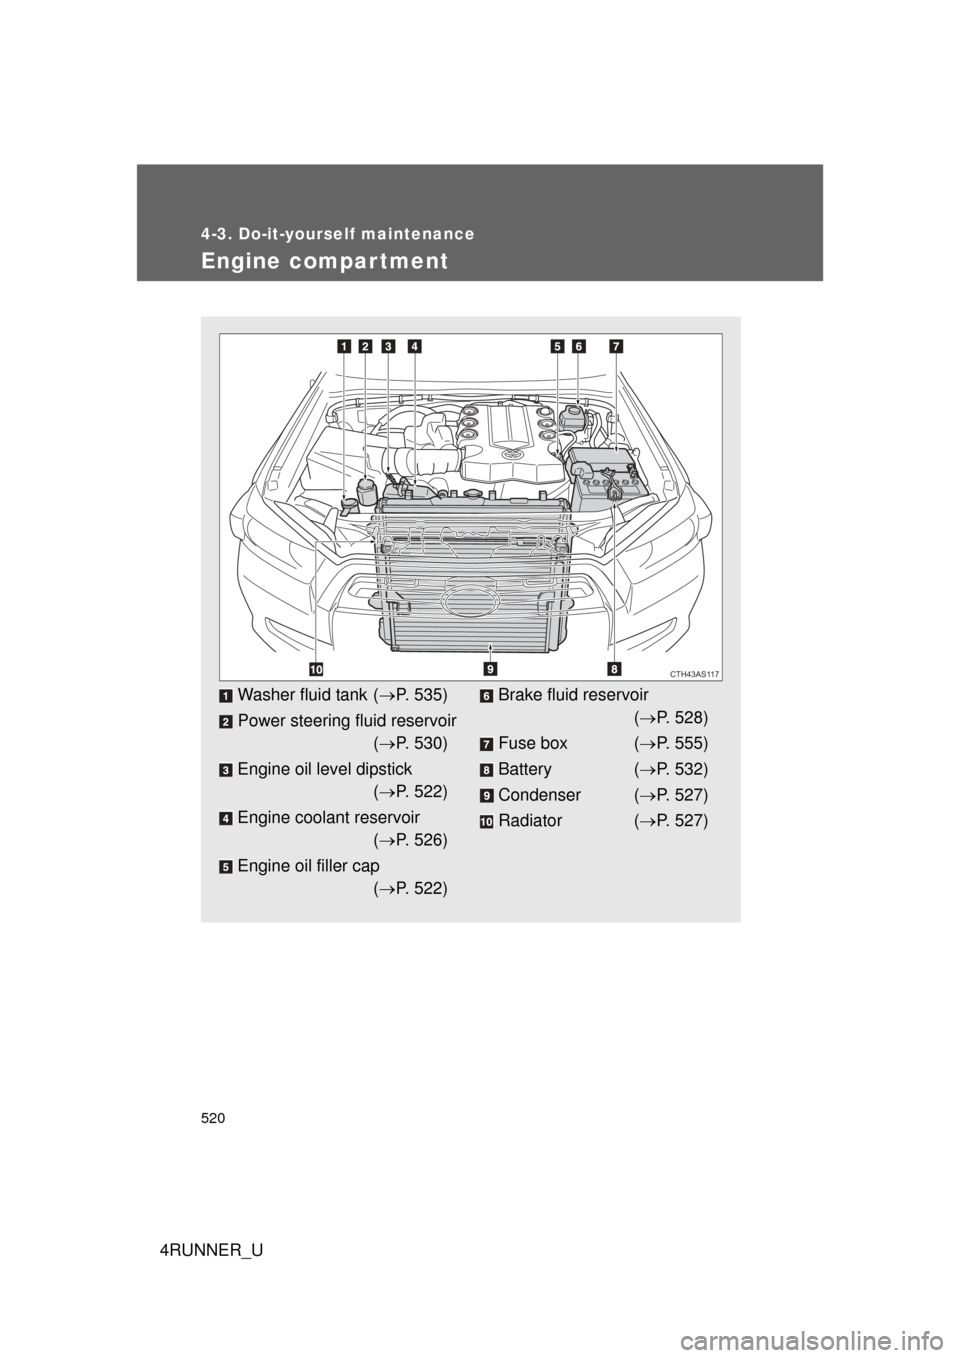 TOYOTA 4RUNNER 2012 N280 / 5.G Owners Manual 520
4-3. Do-it-yourself maintenance
4RUNNER_U
Engine compar tment
Washer fluid tank (P. 535)
Power steering fluid reservoir ( P. 530)
Engine oil level dipstick ( P. 522)
Engine coolant reserv